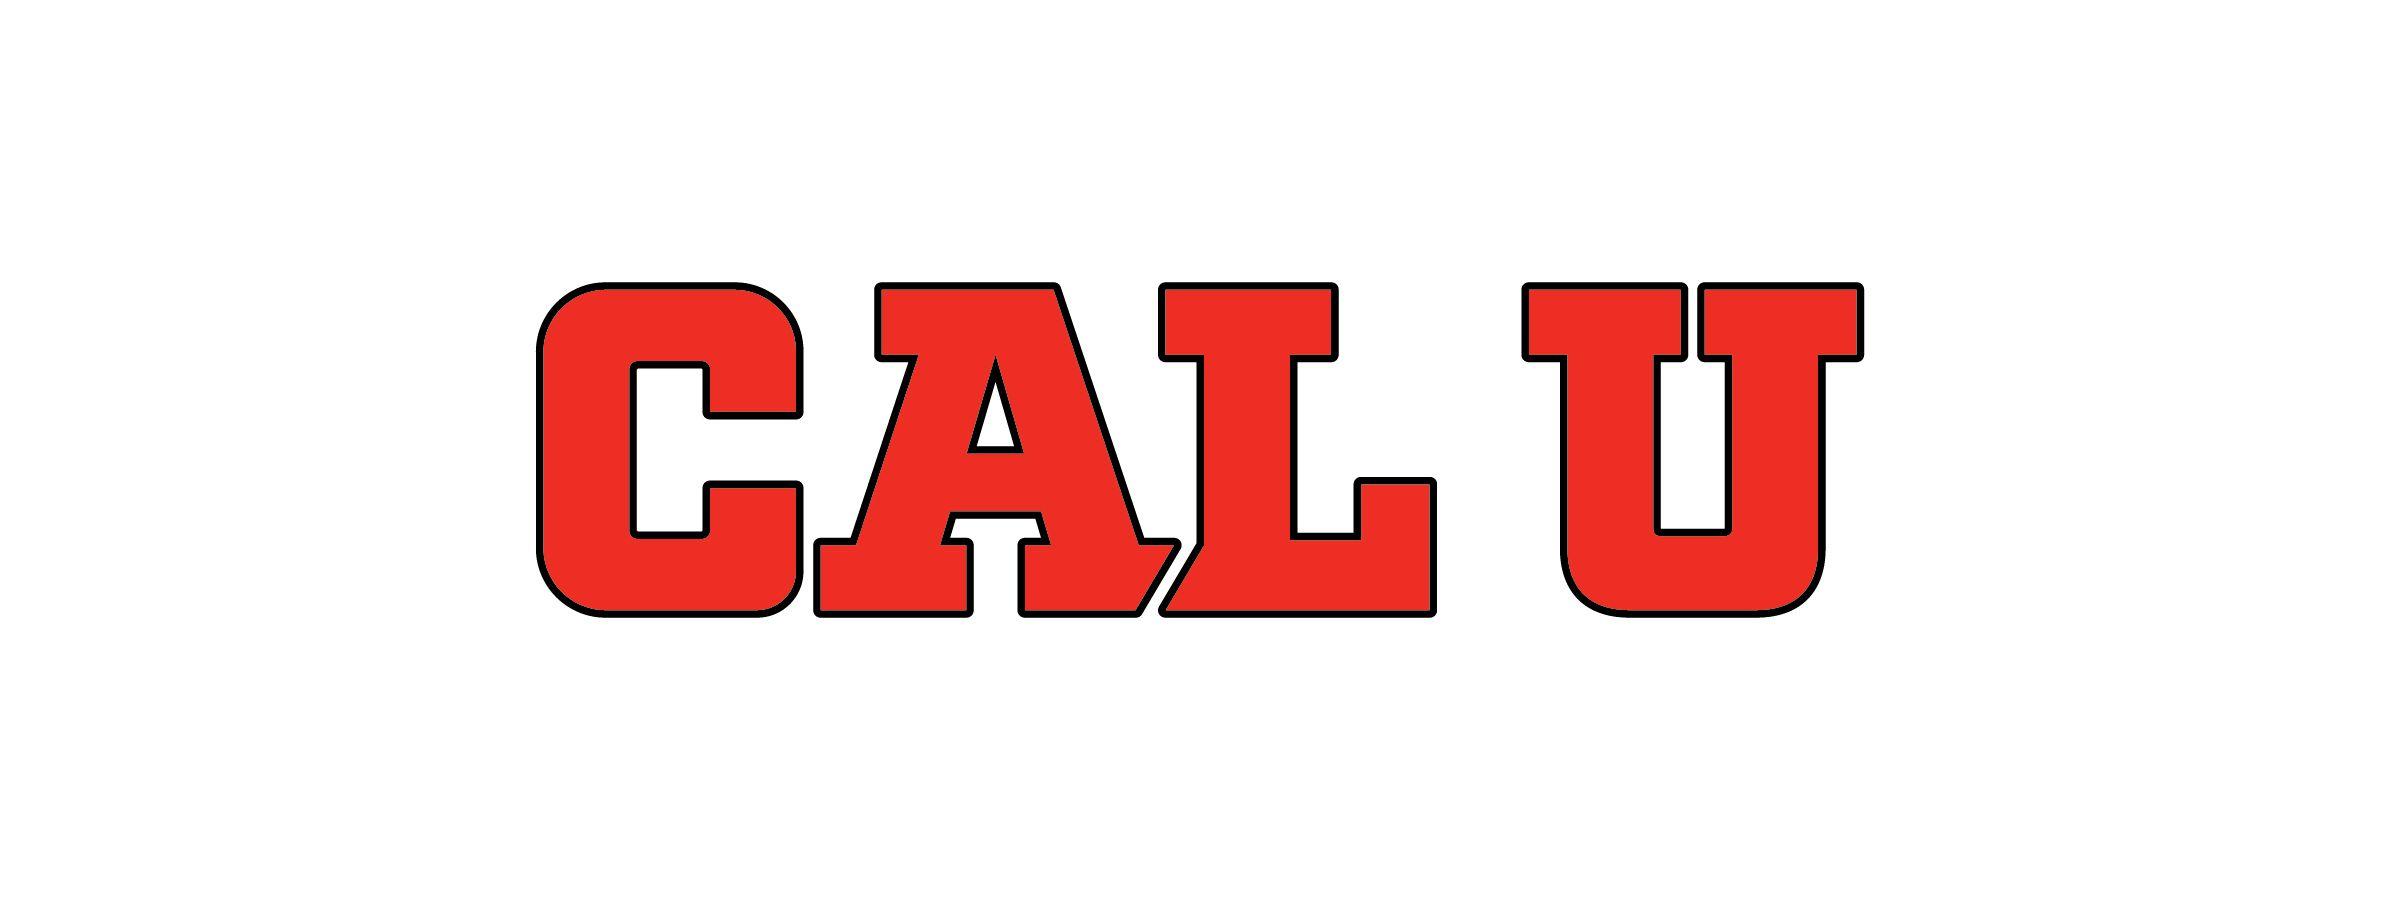 Cal Logo - Download Logos